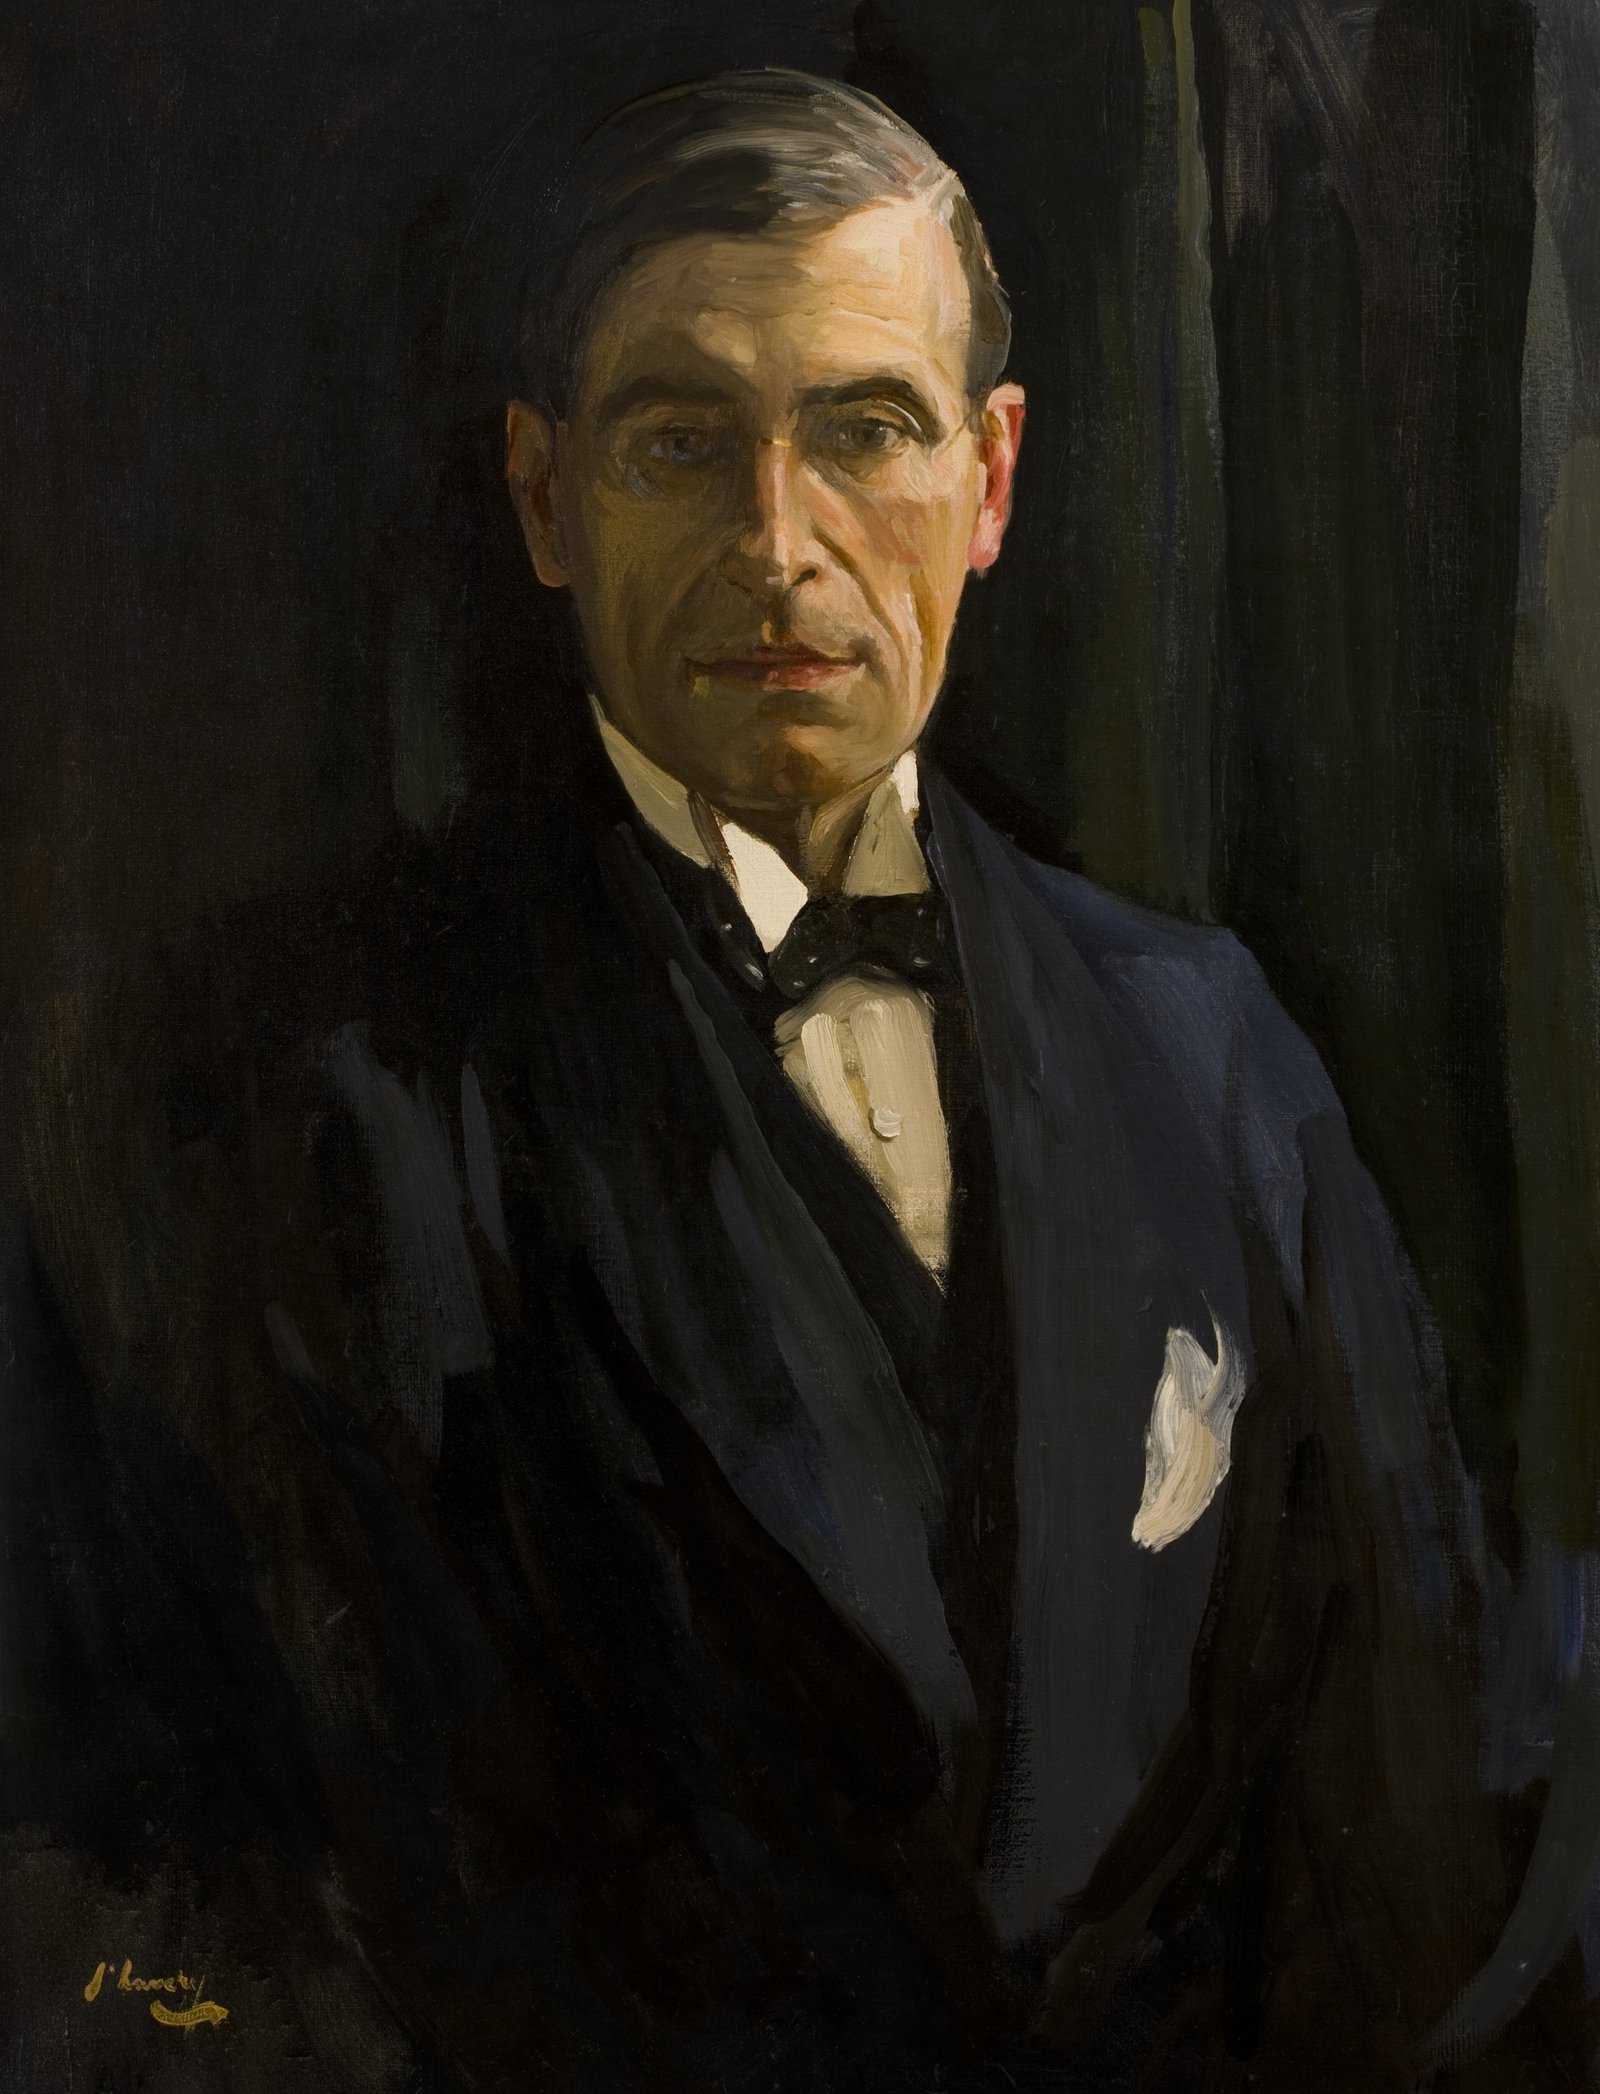 Image - Alfred Cope, British Under-Secretary for Ireland (Credit: Collection & image © Hugh Lane Gallery)